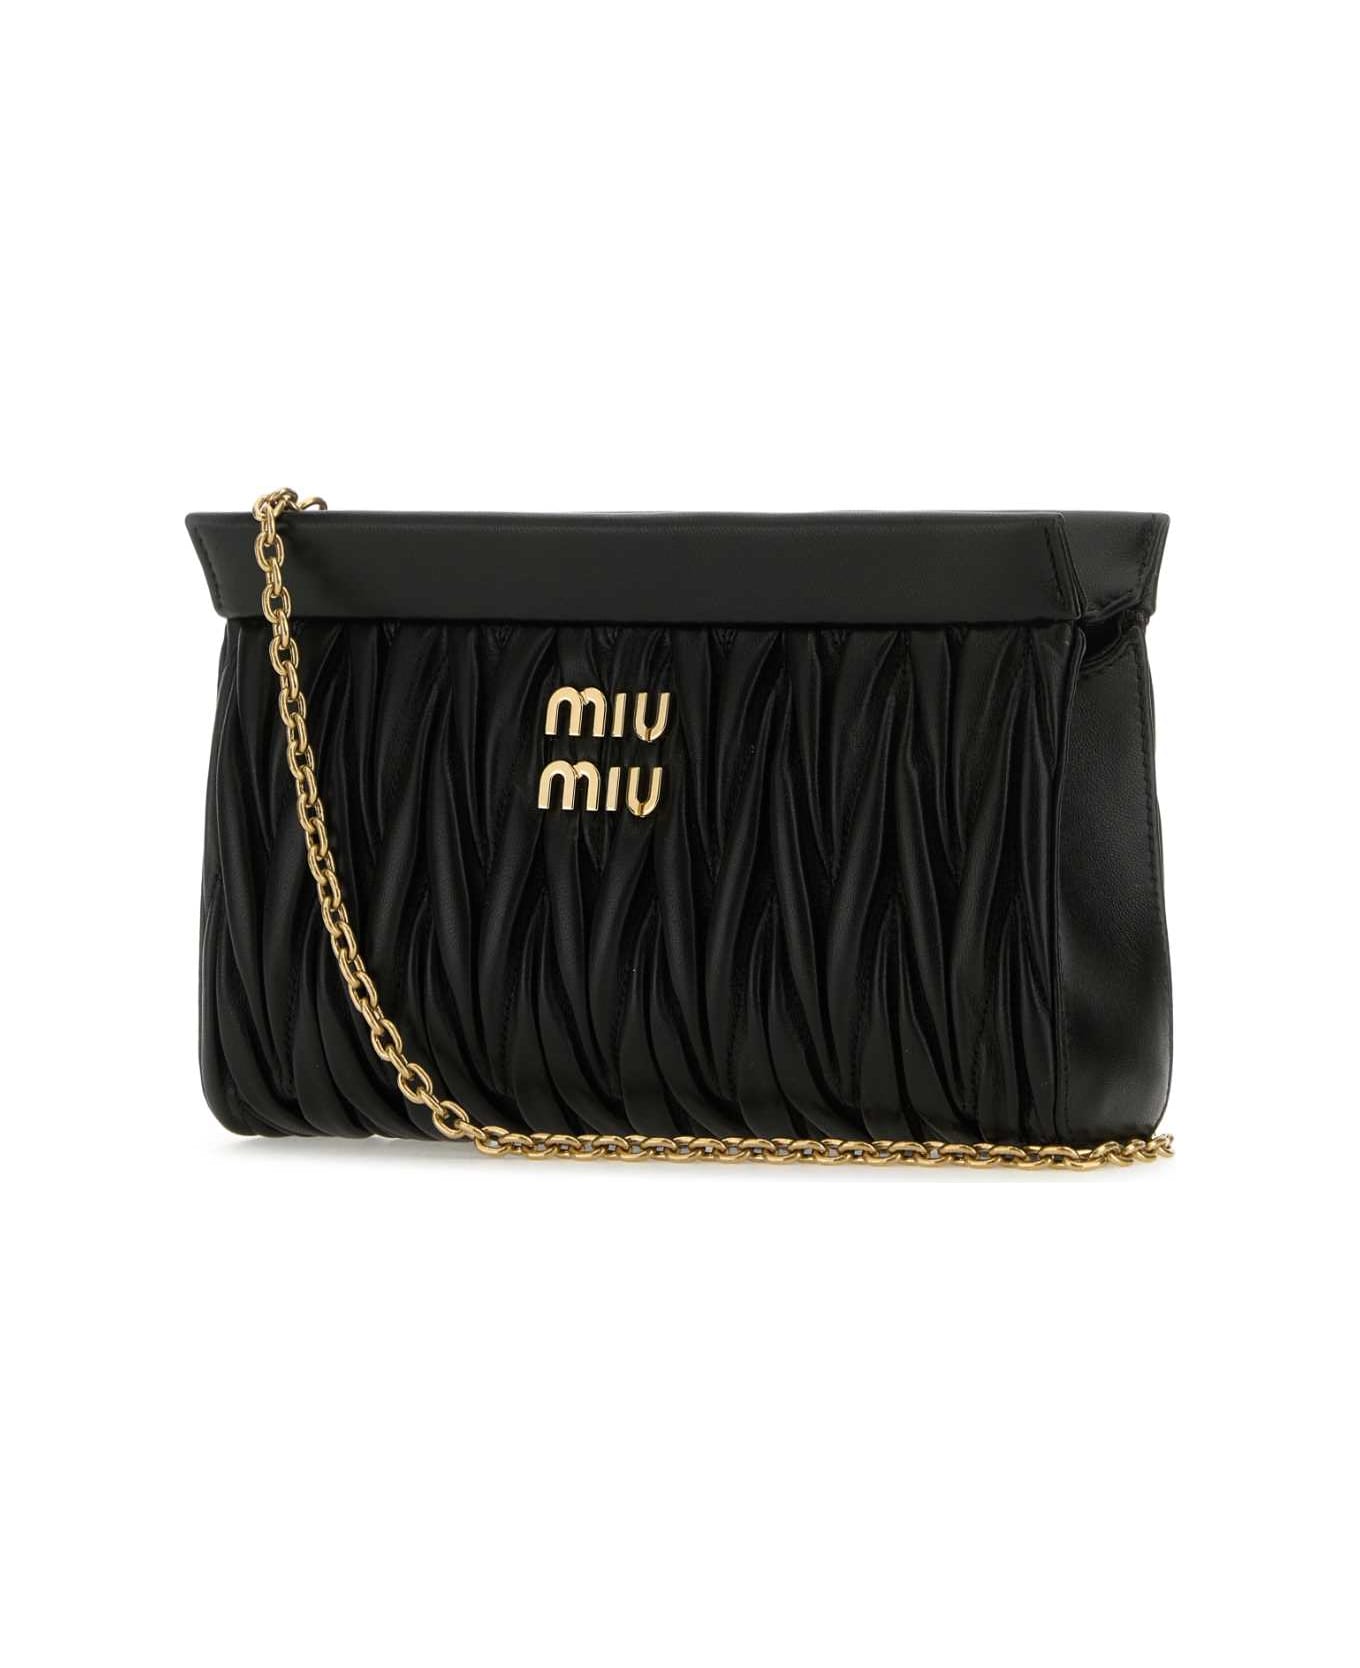 Miu Miu Black Leather Crossbody Bag | italist